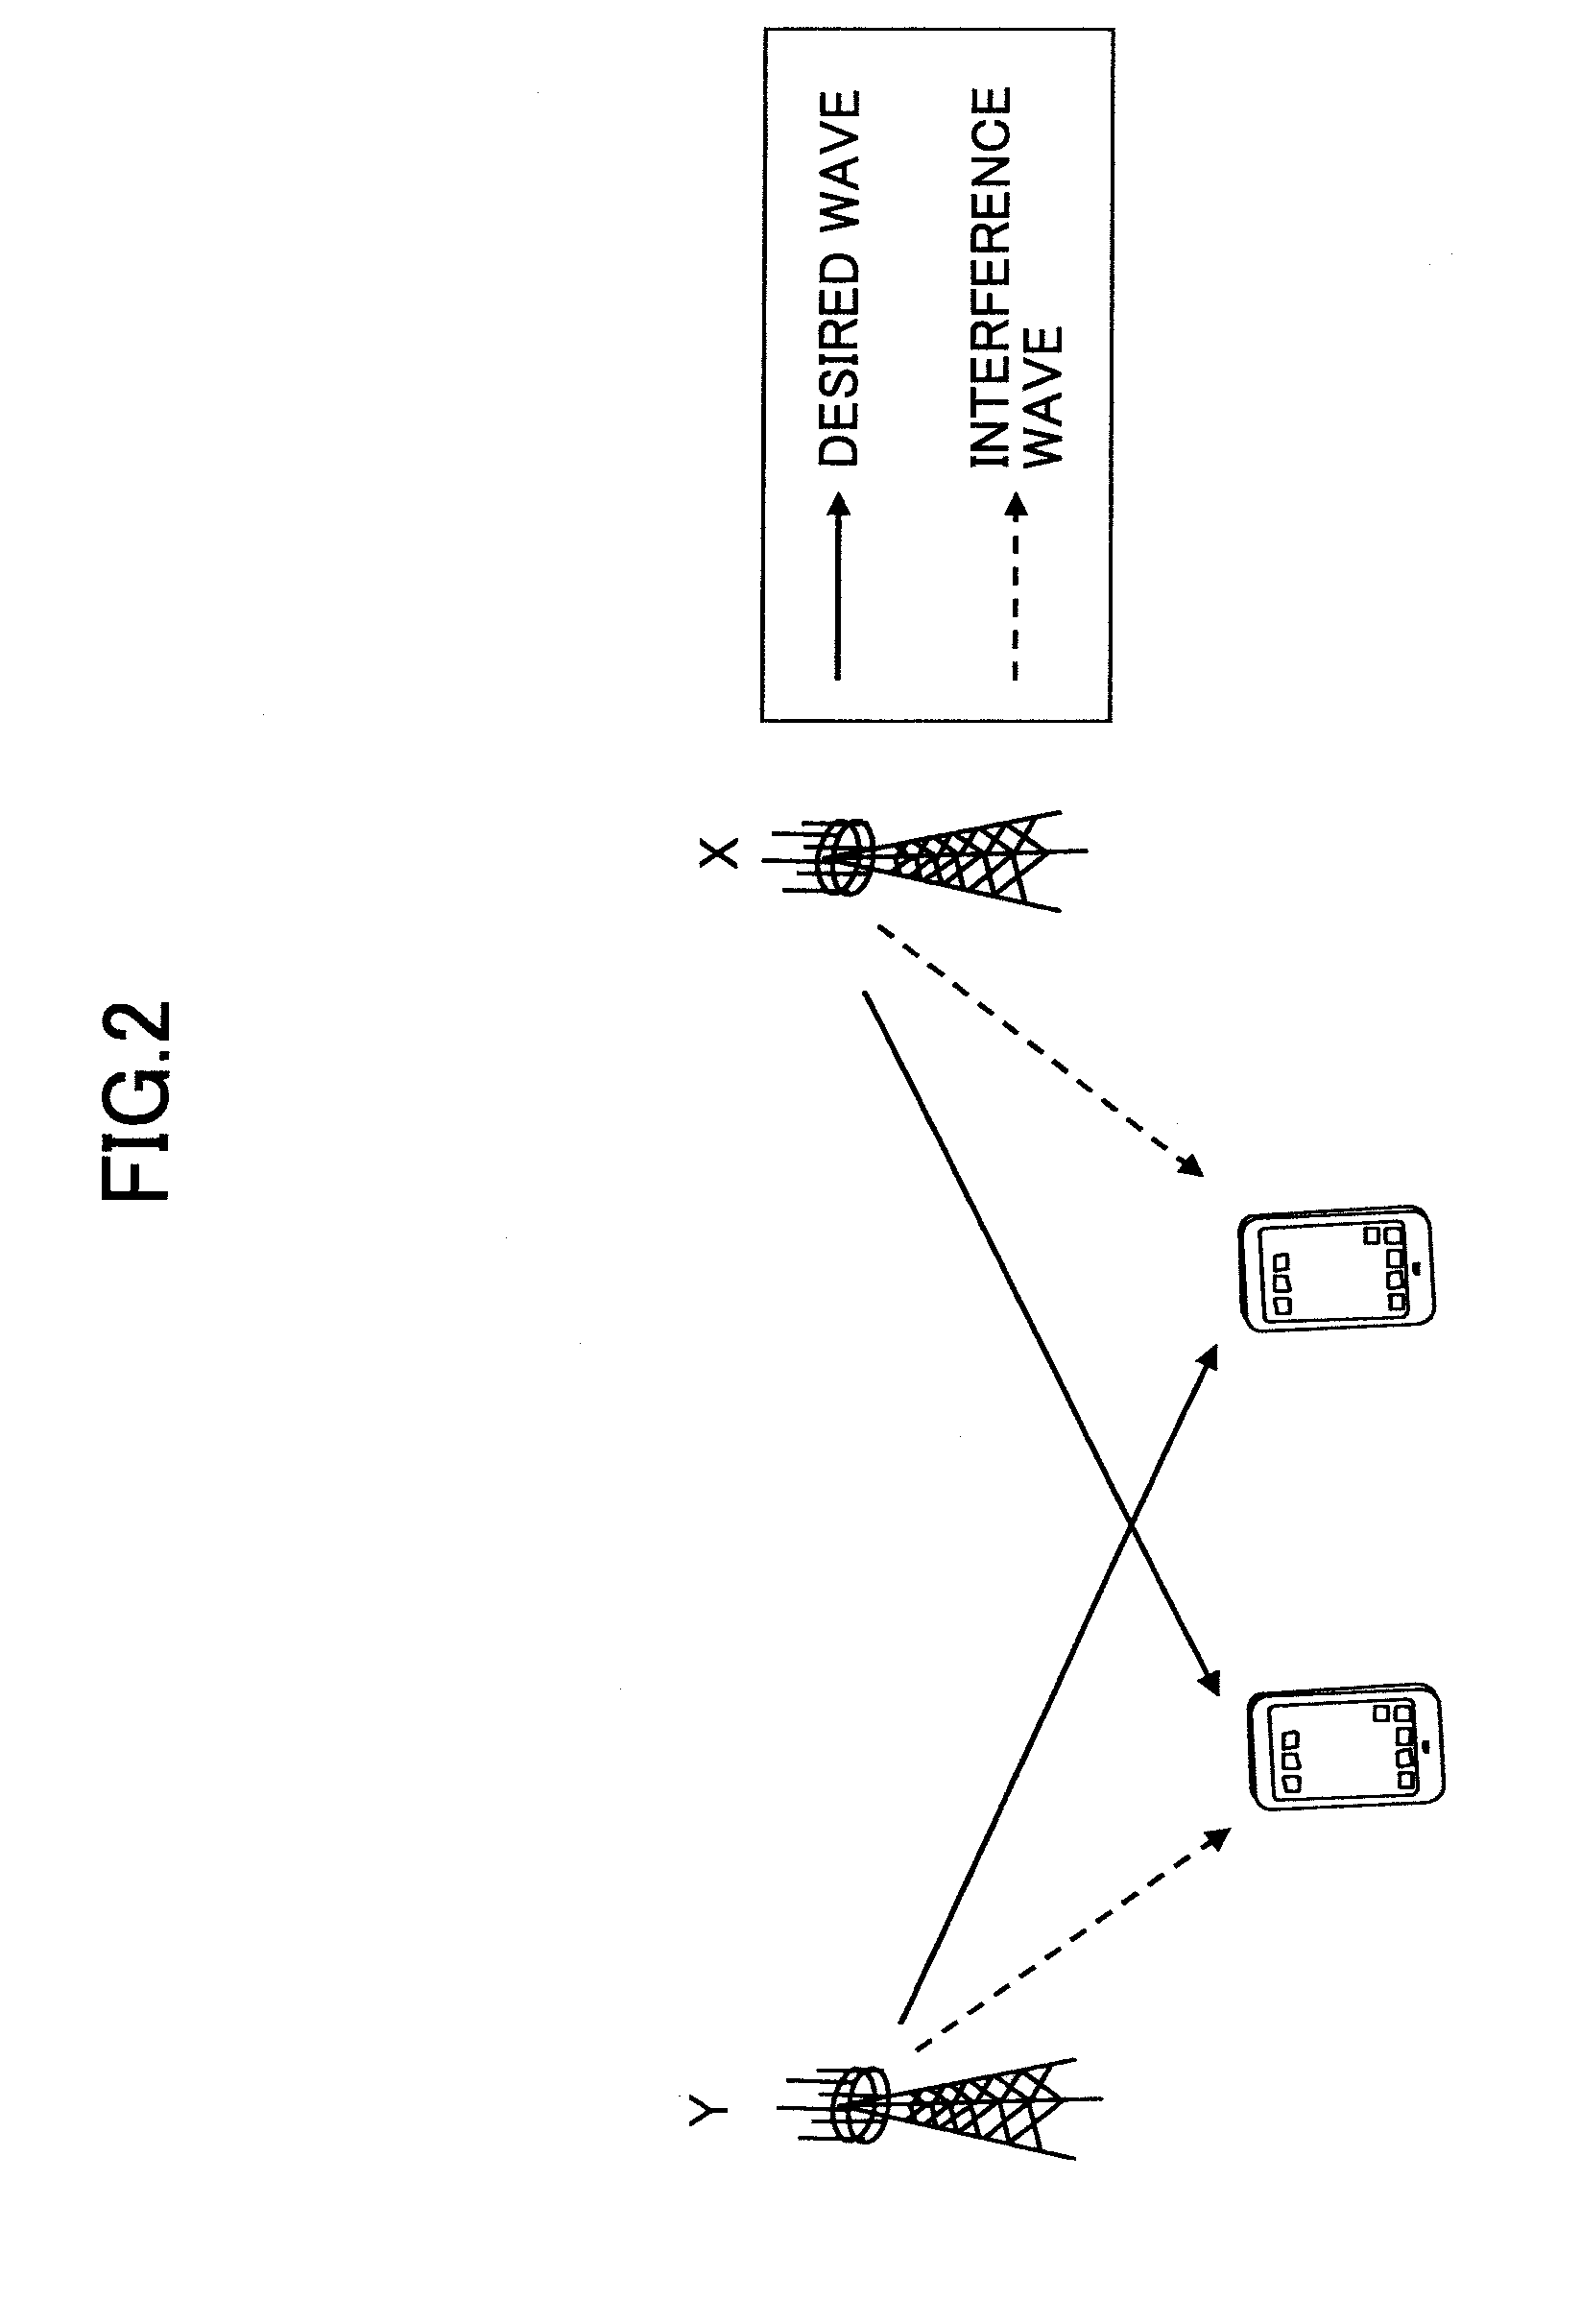 Radio communication apparatus and method